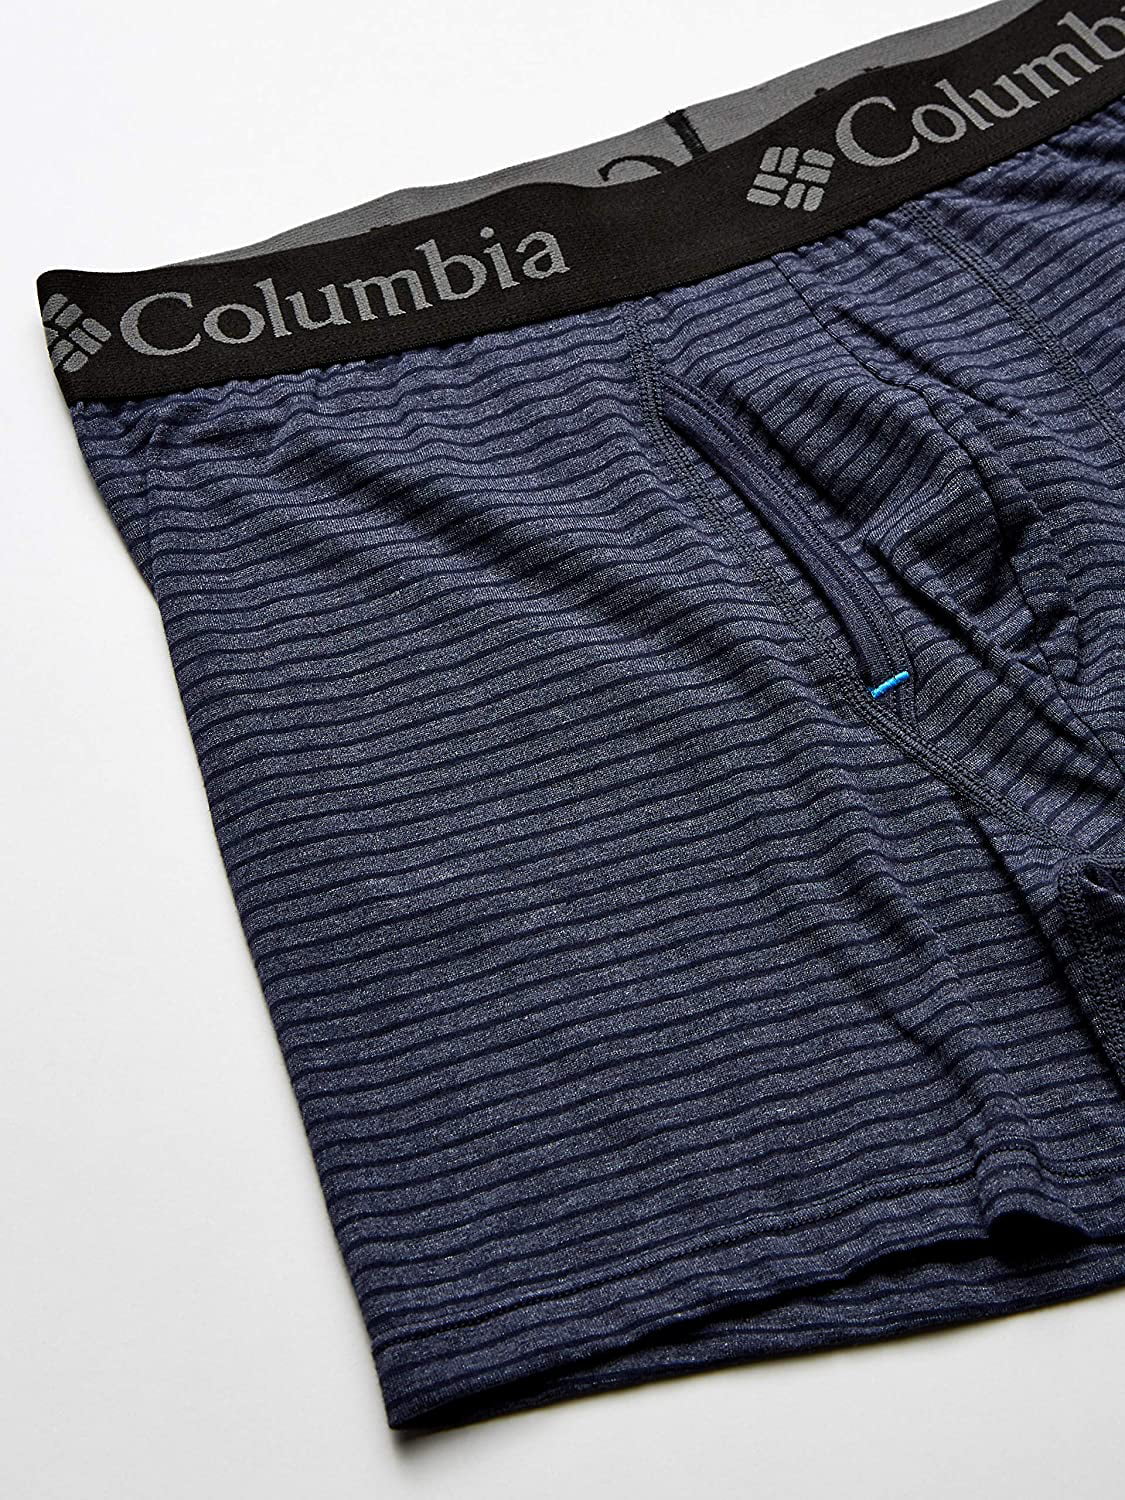 Columbia Men's Performance Cotton Stretch Boxer Brief-3 Pack Large Blue 